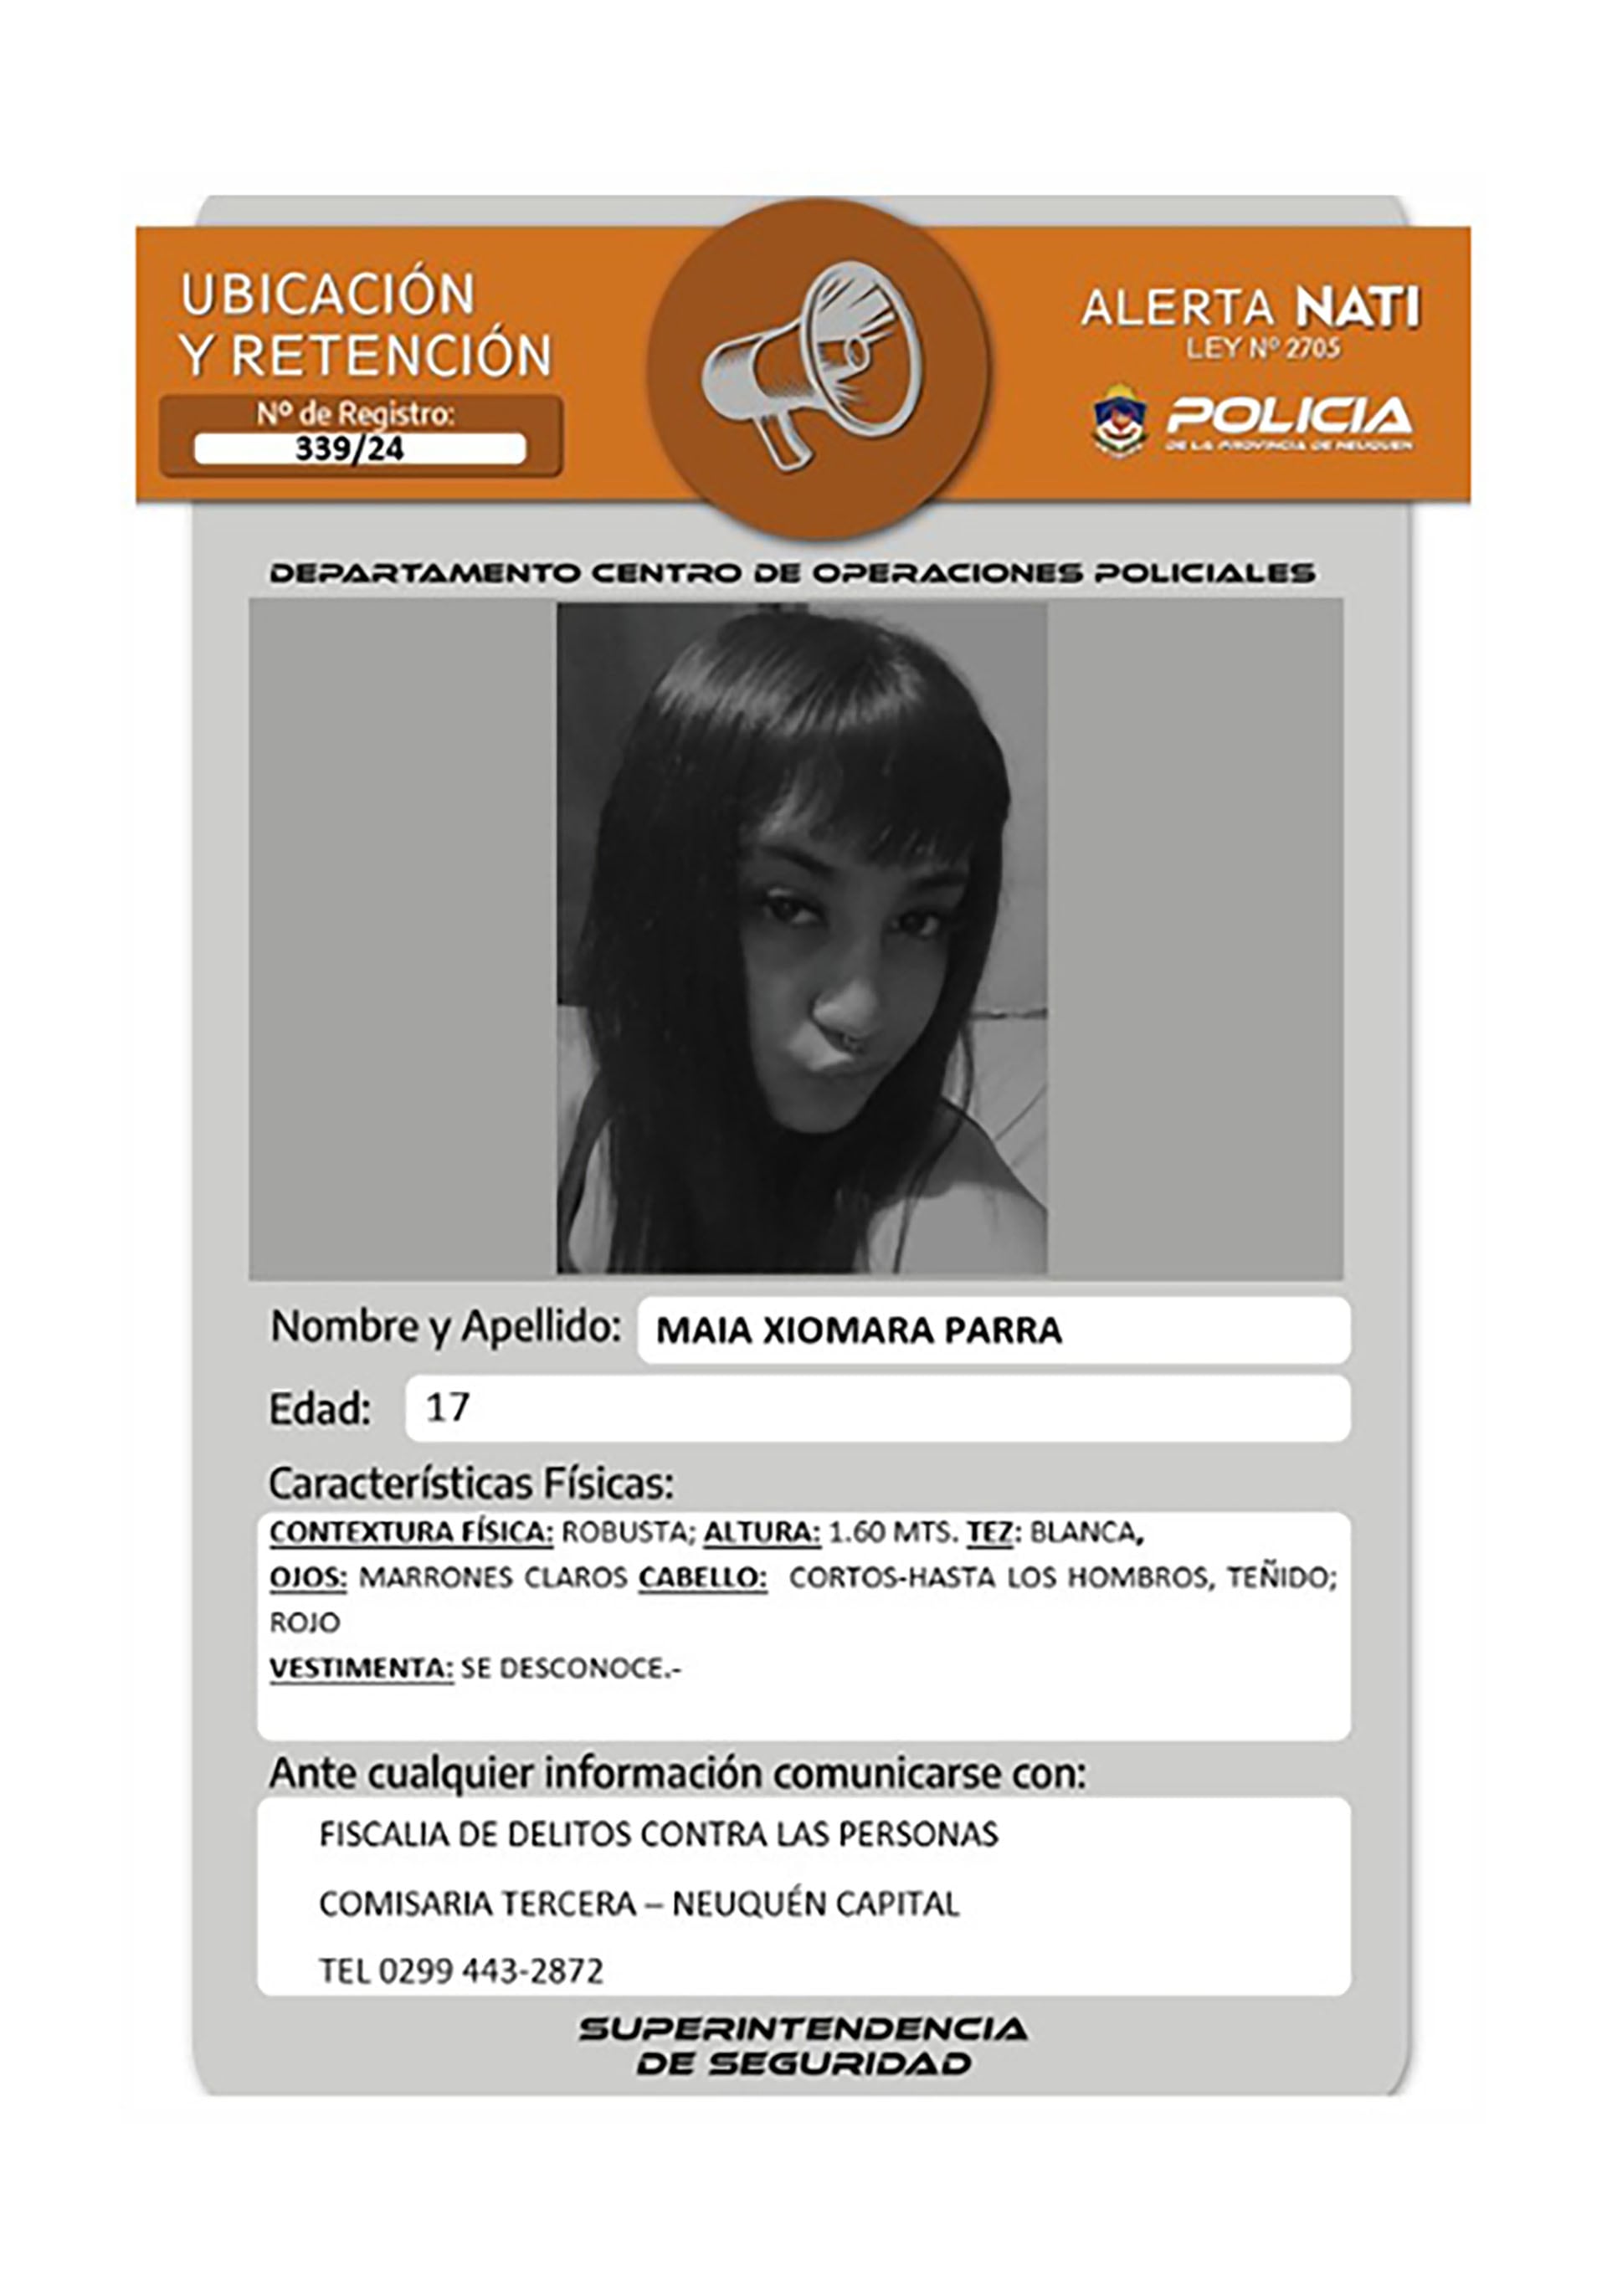 Maia Xiomara Parra adolescente desaparecida